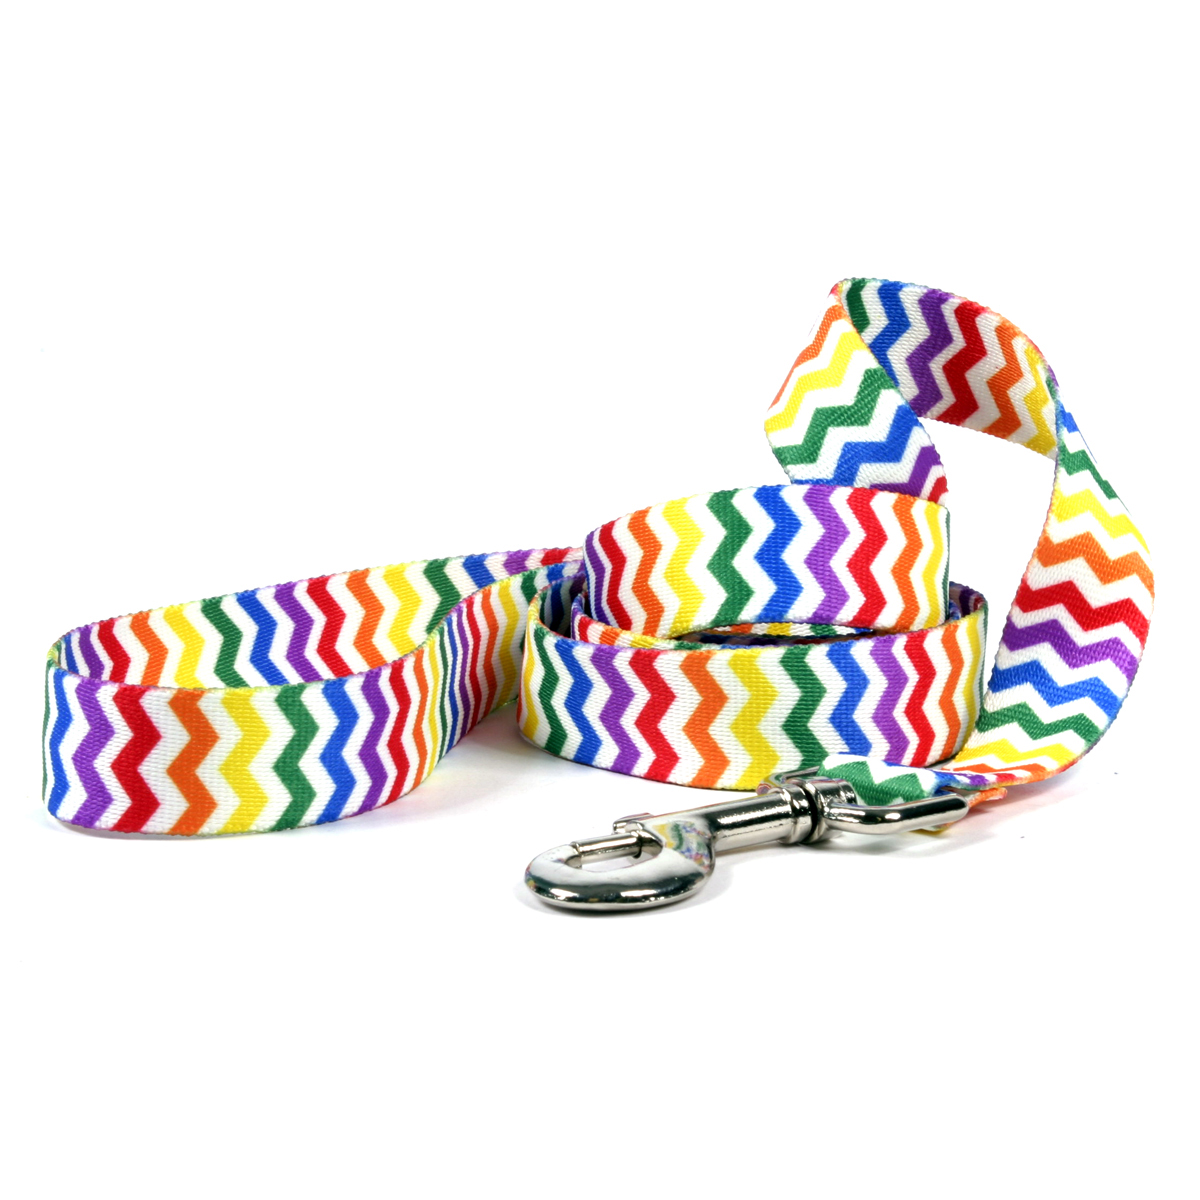 Chevron Dog Leash by Yellow Dog - Candy Stripe